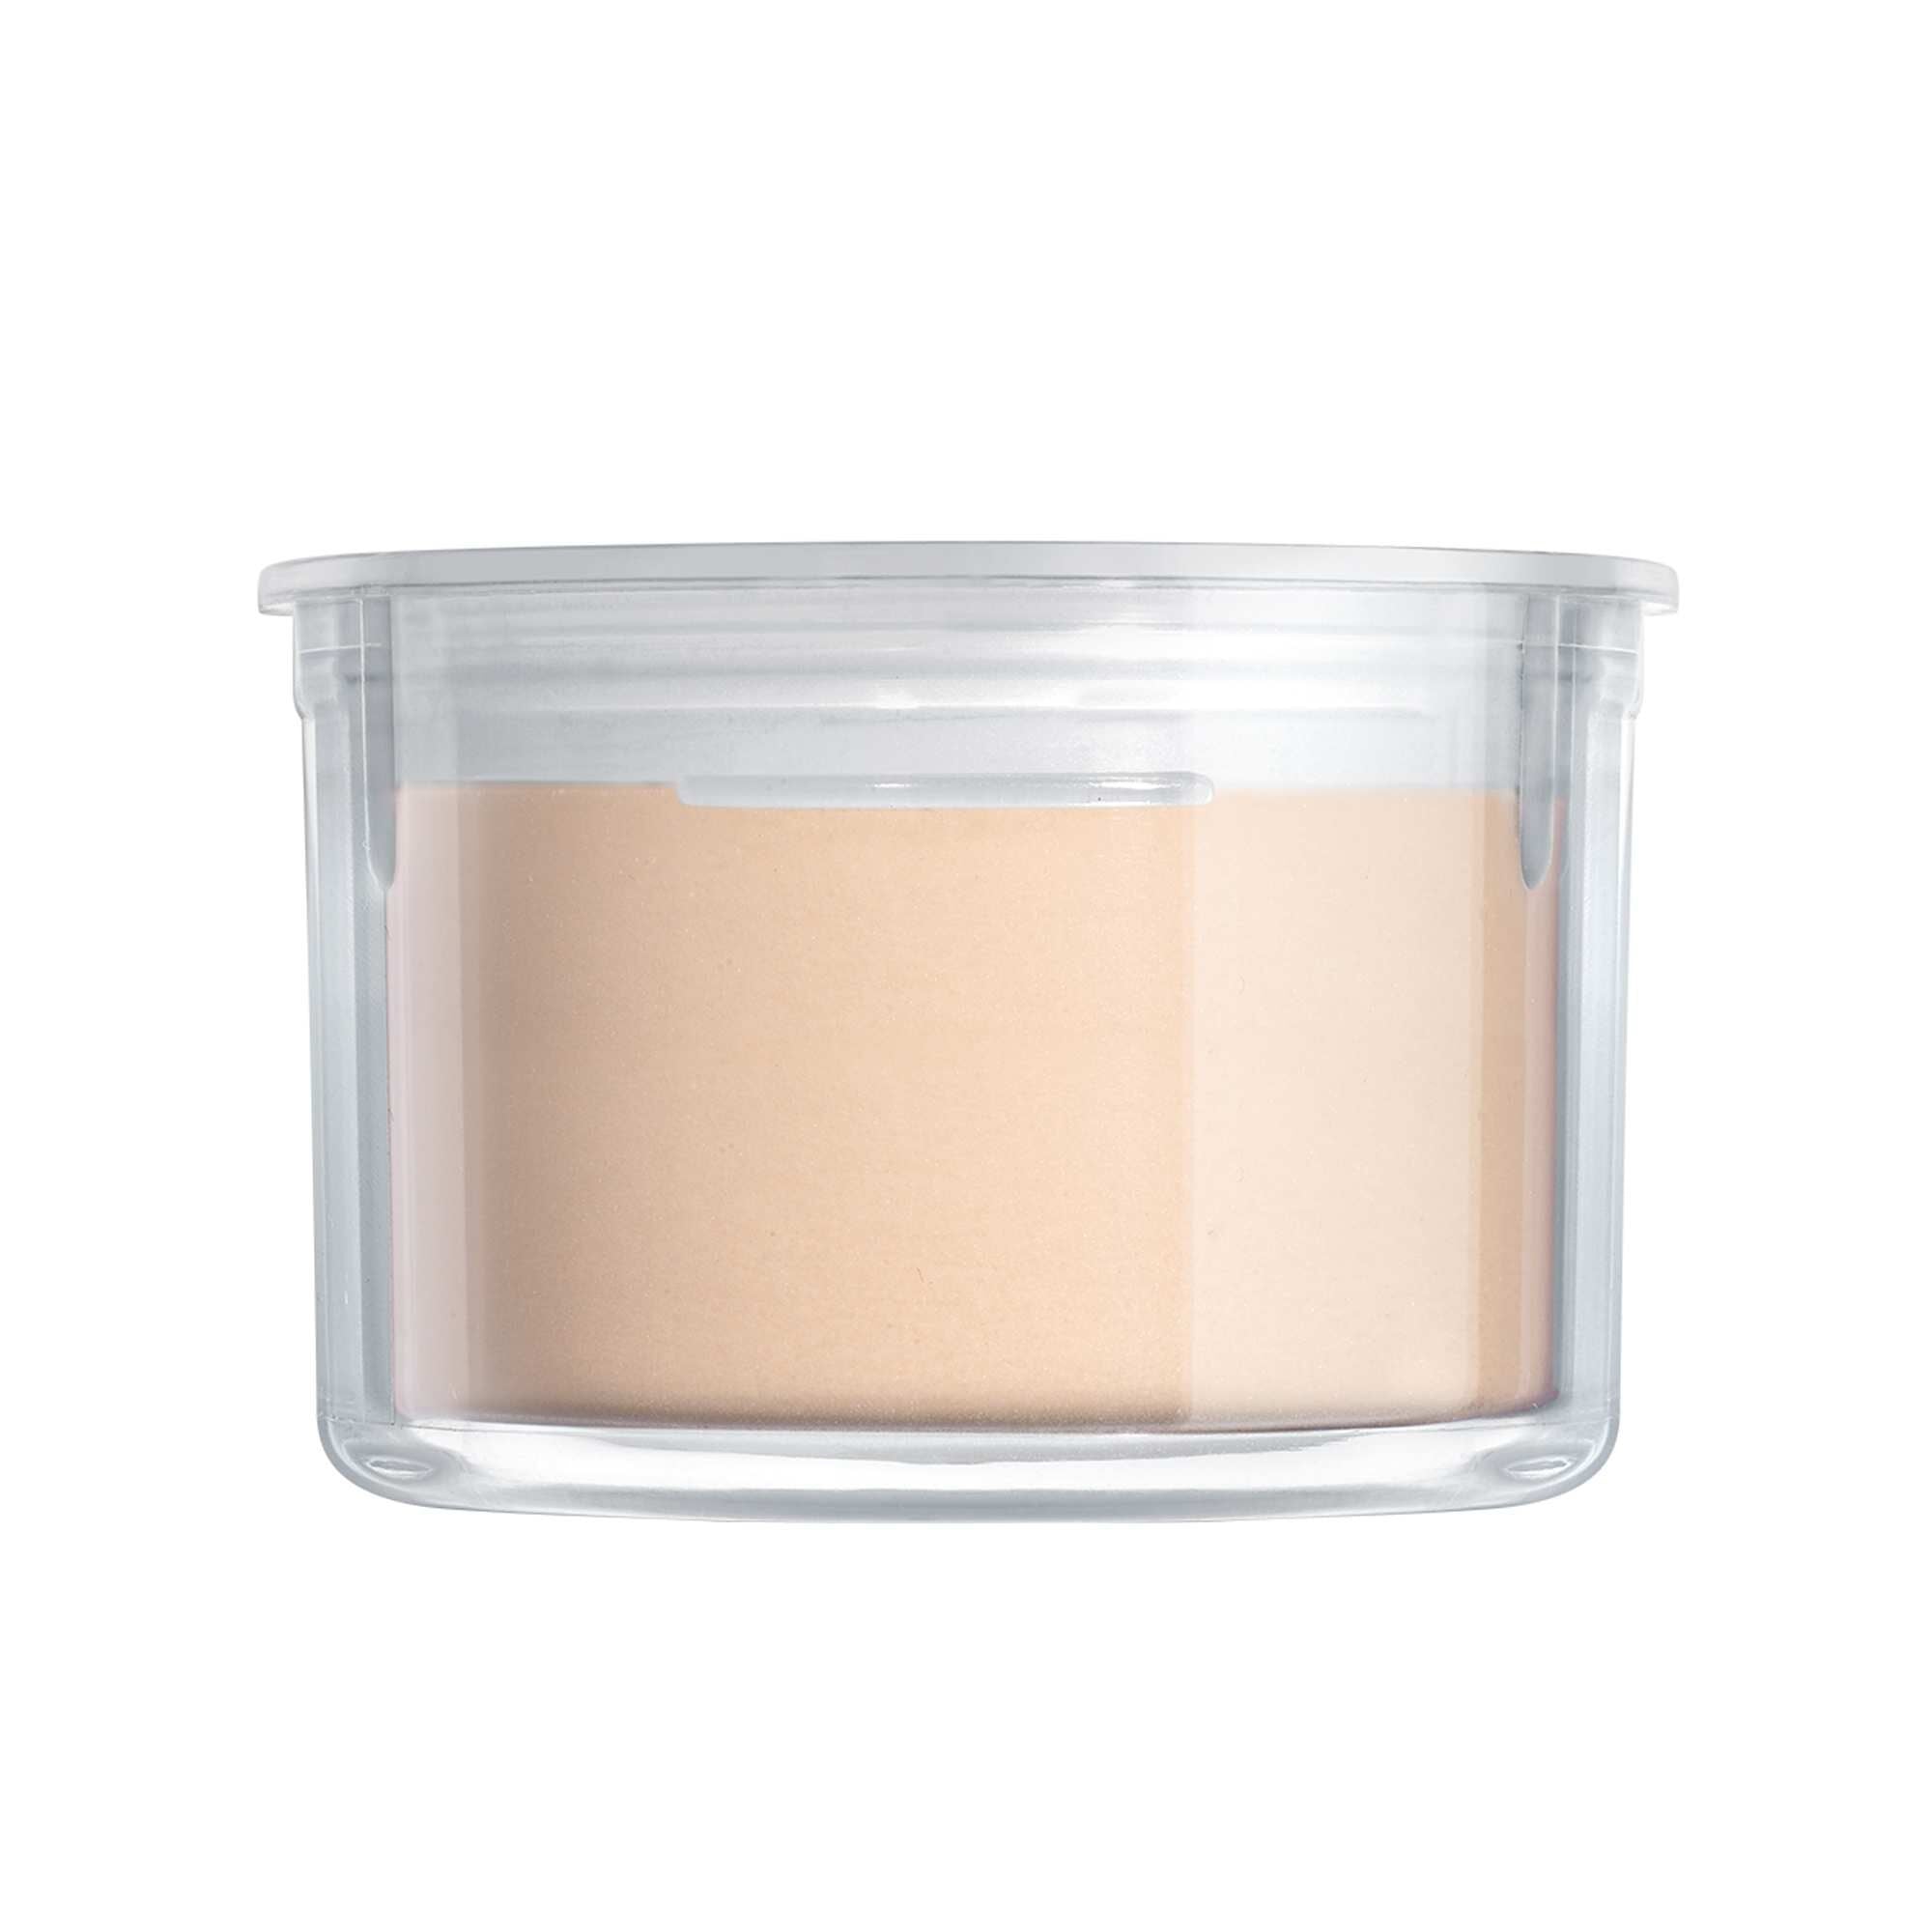 Refill insert for the Translucent Loose Powder | ARTDECO